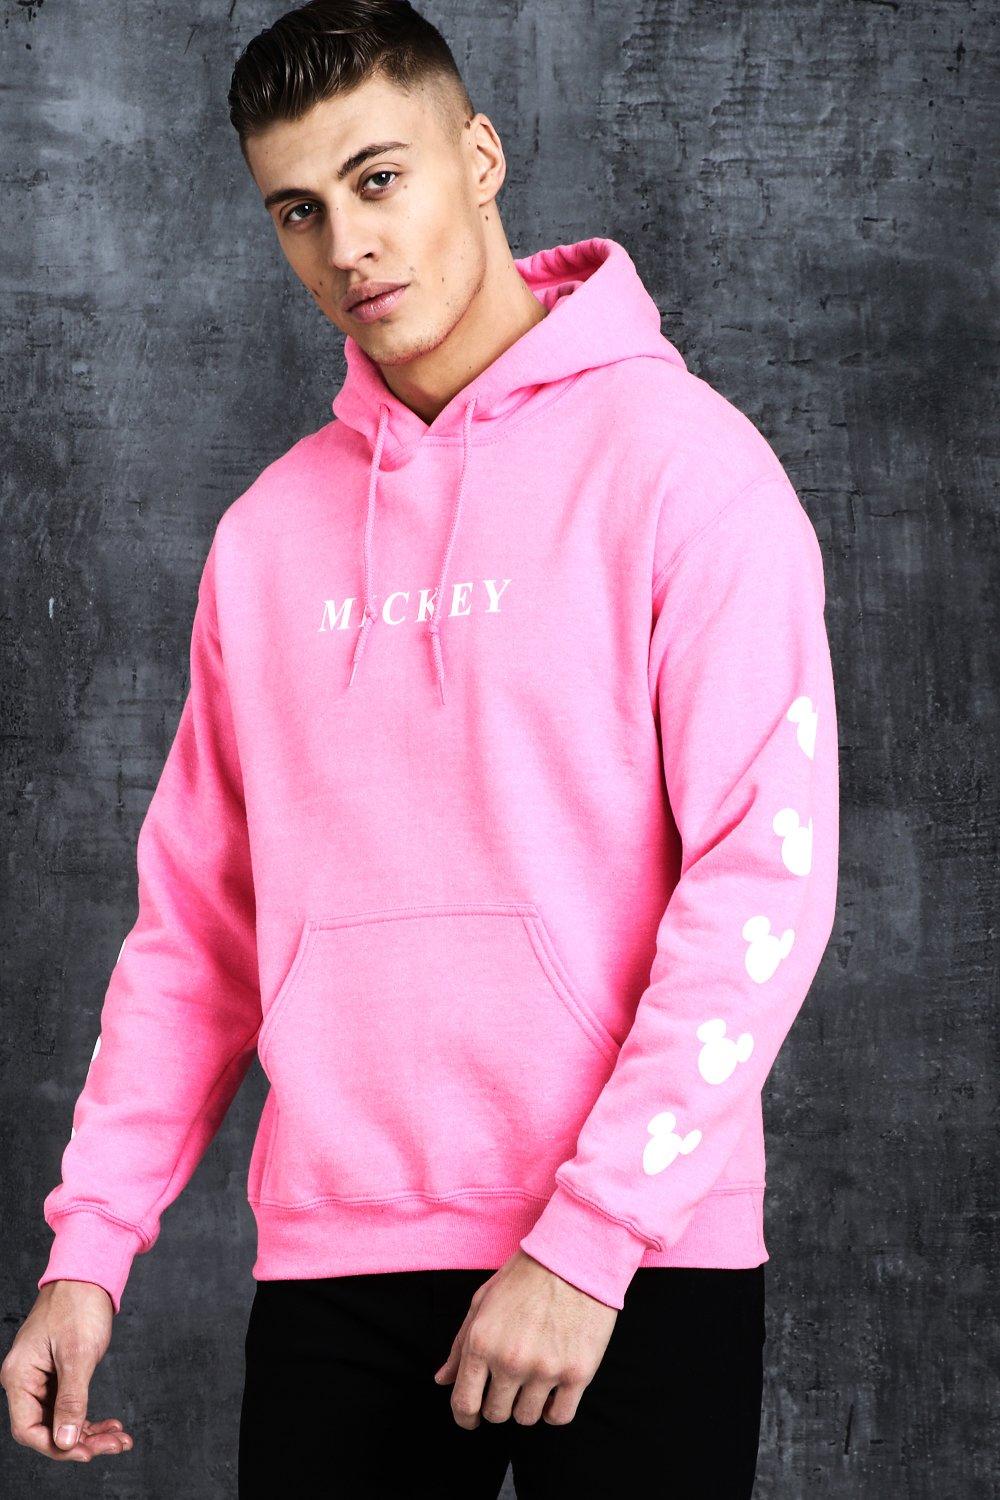 pink disney sweatshirt